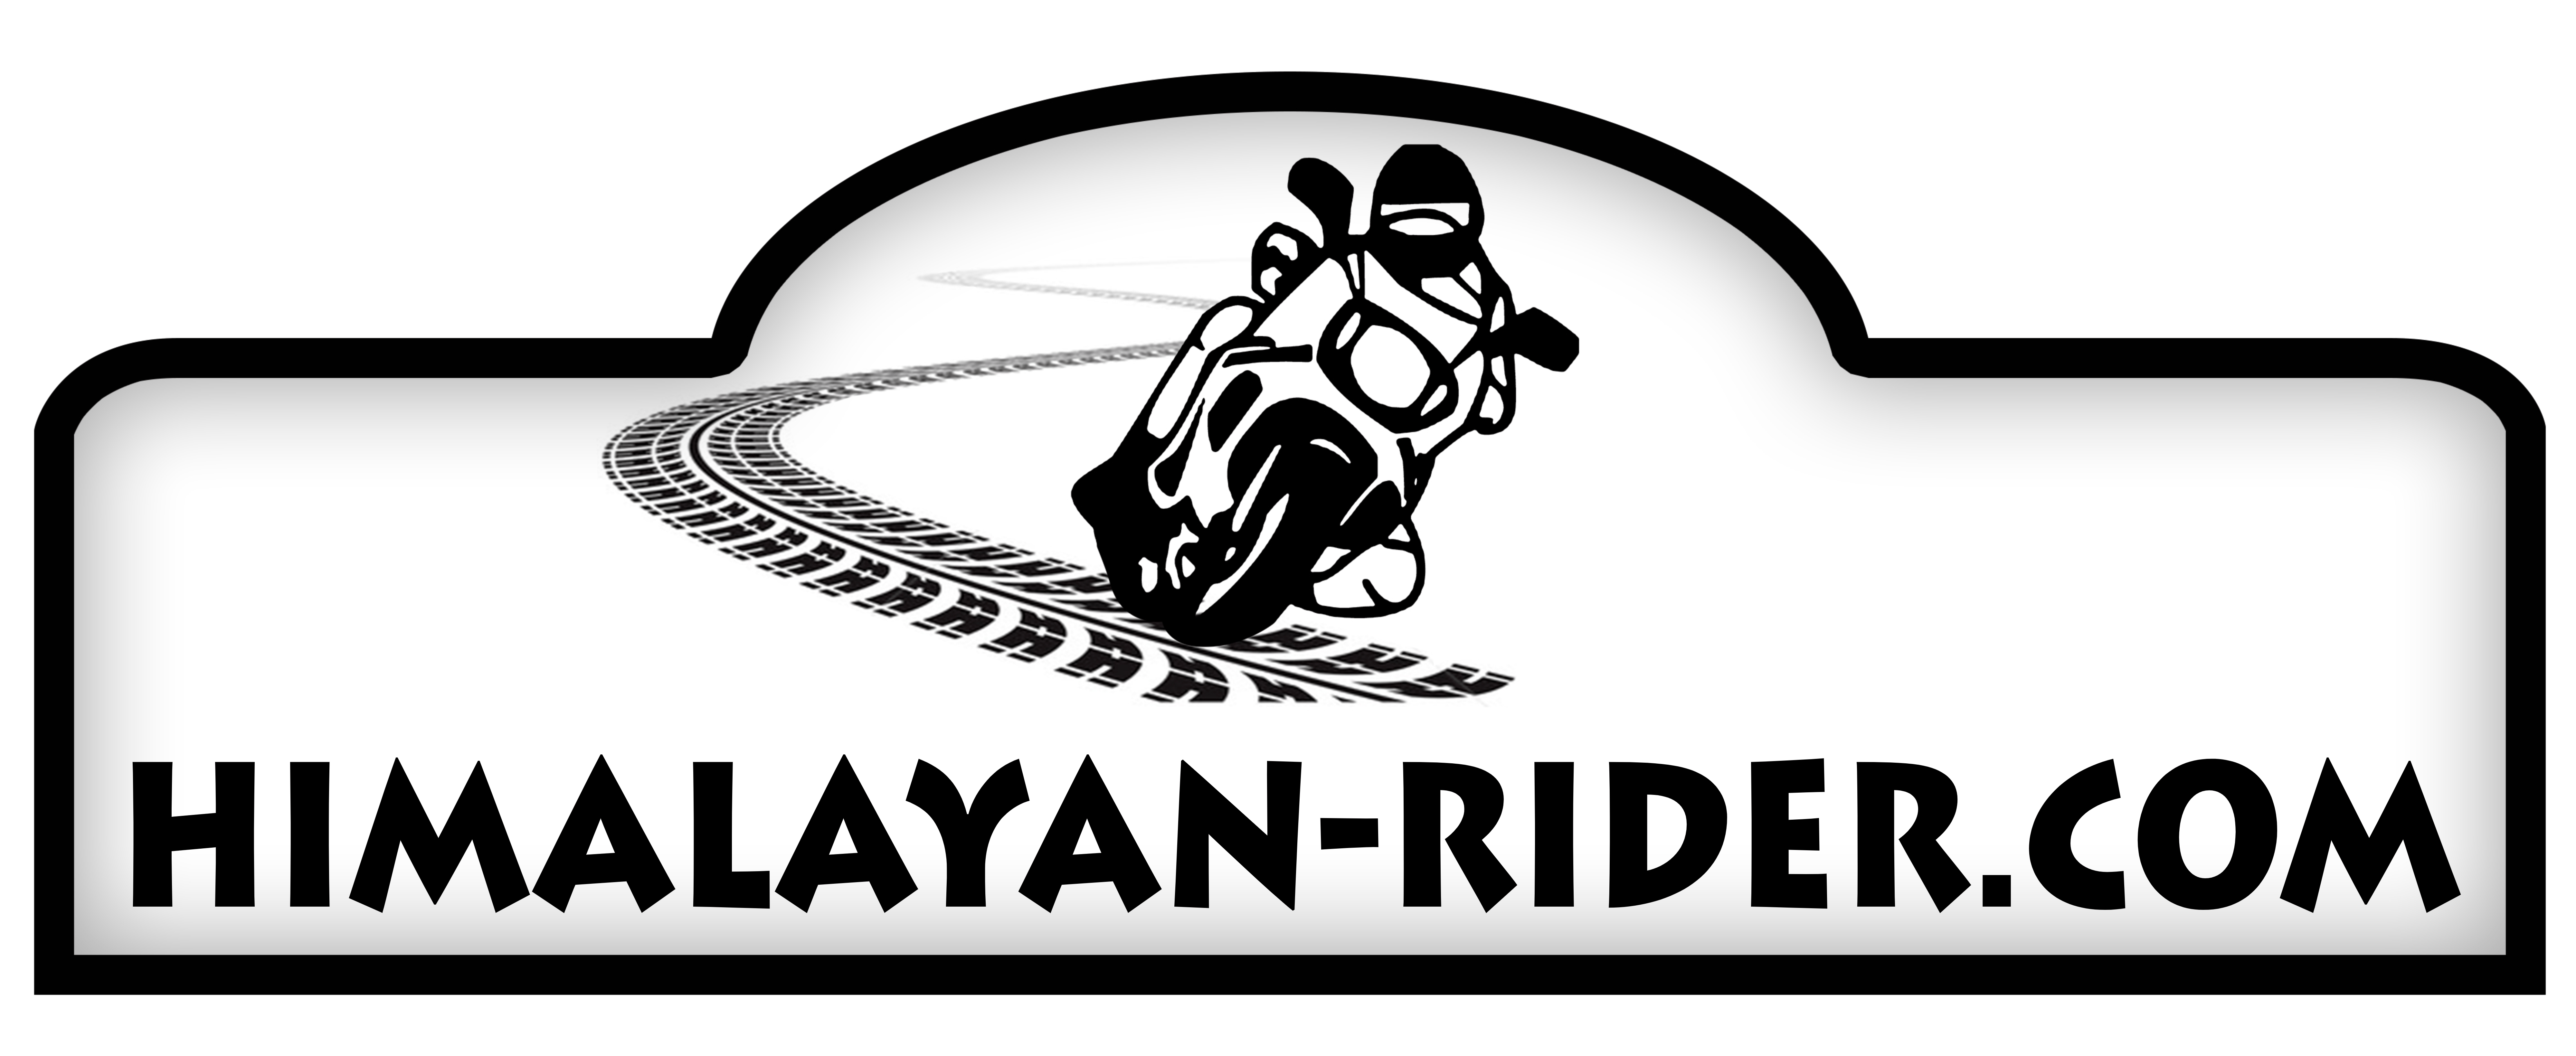 Himalayan Rider